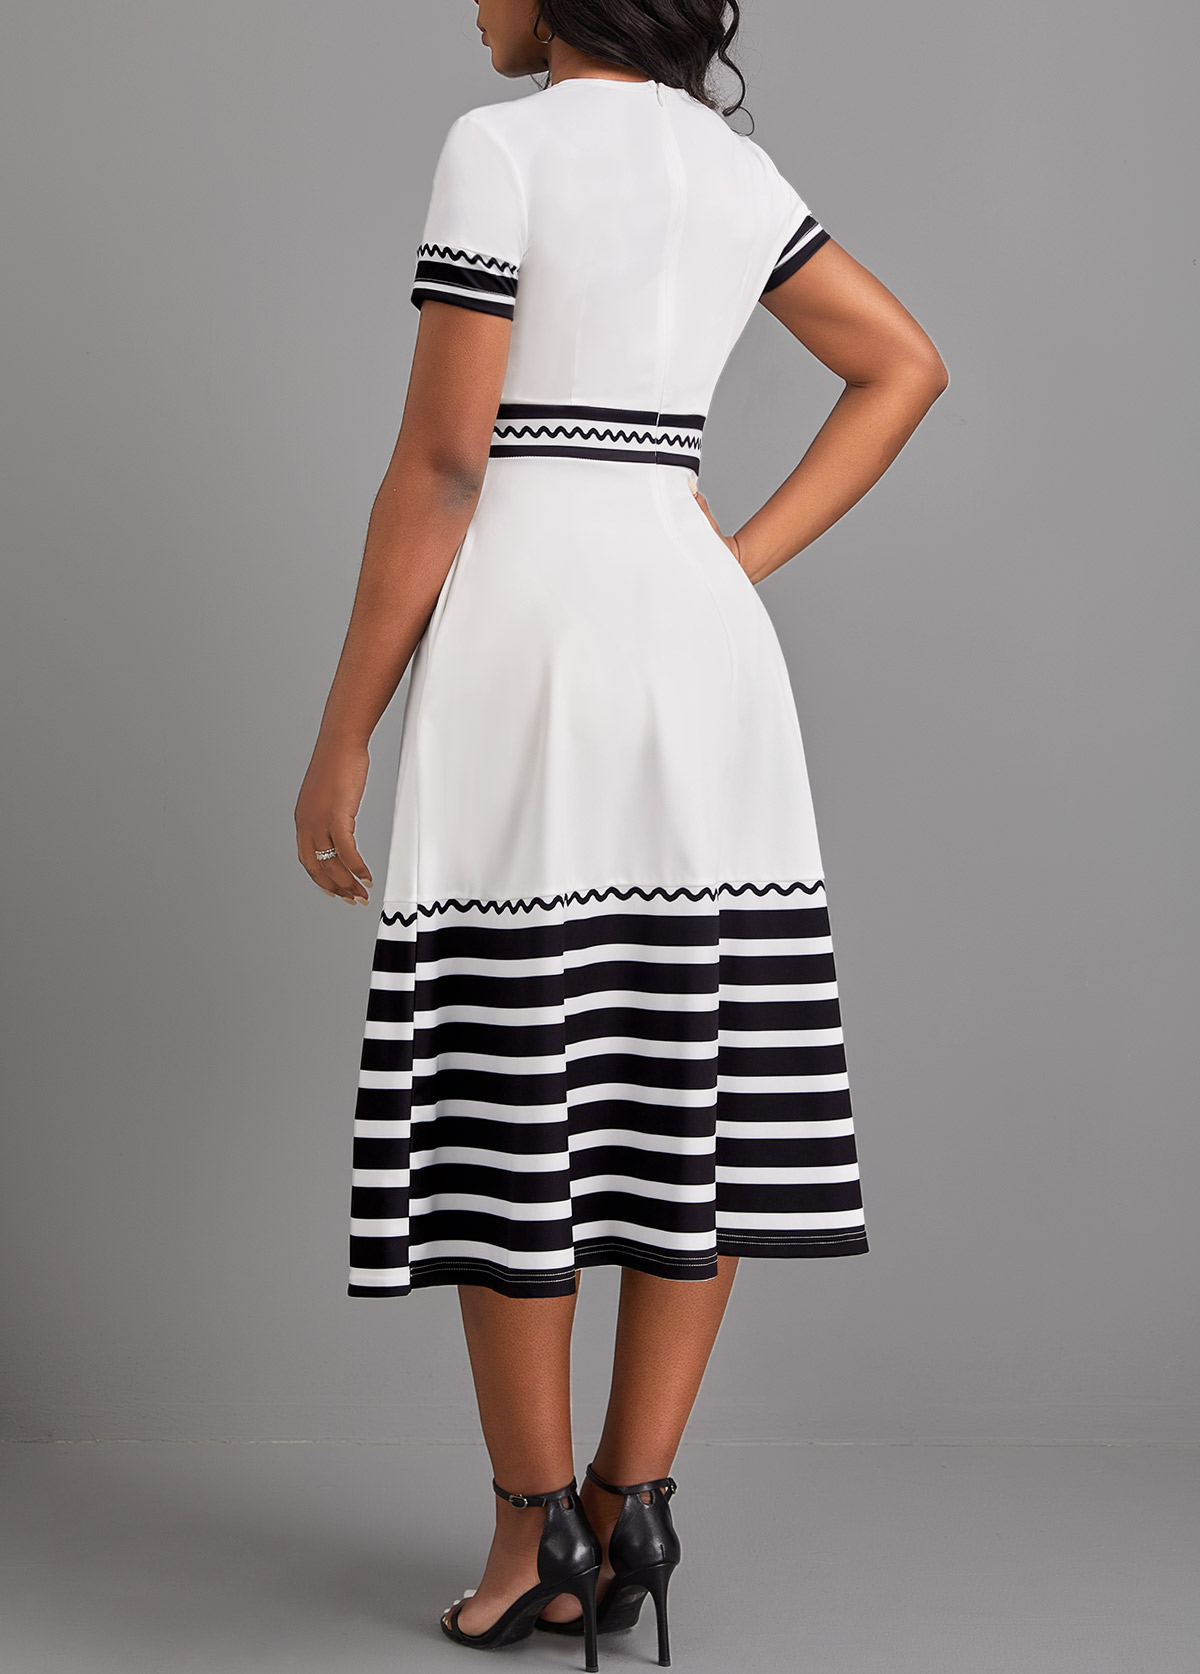 Striped Patchwork White V Neck Short Sleeve Dress